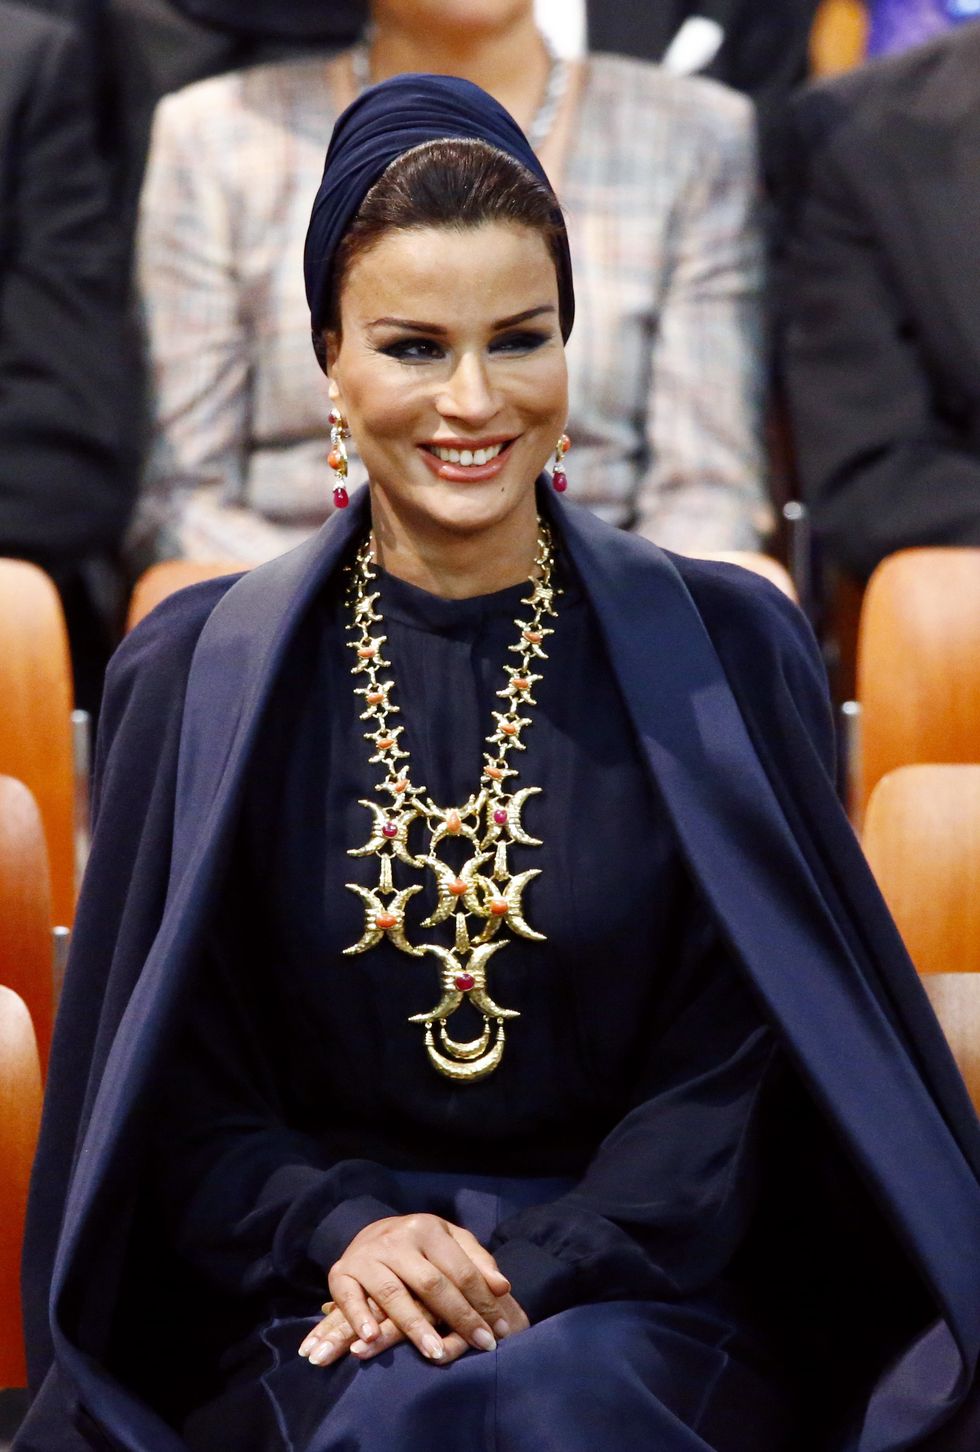 princie diamond christie's scandal qatari royal family al thani